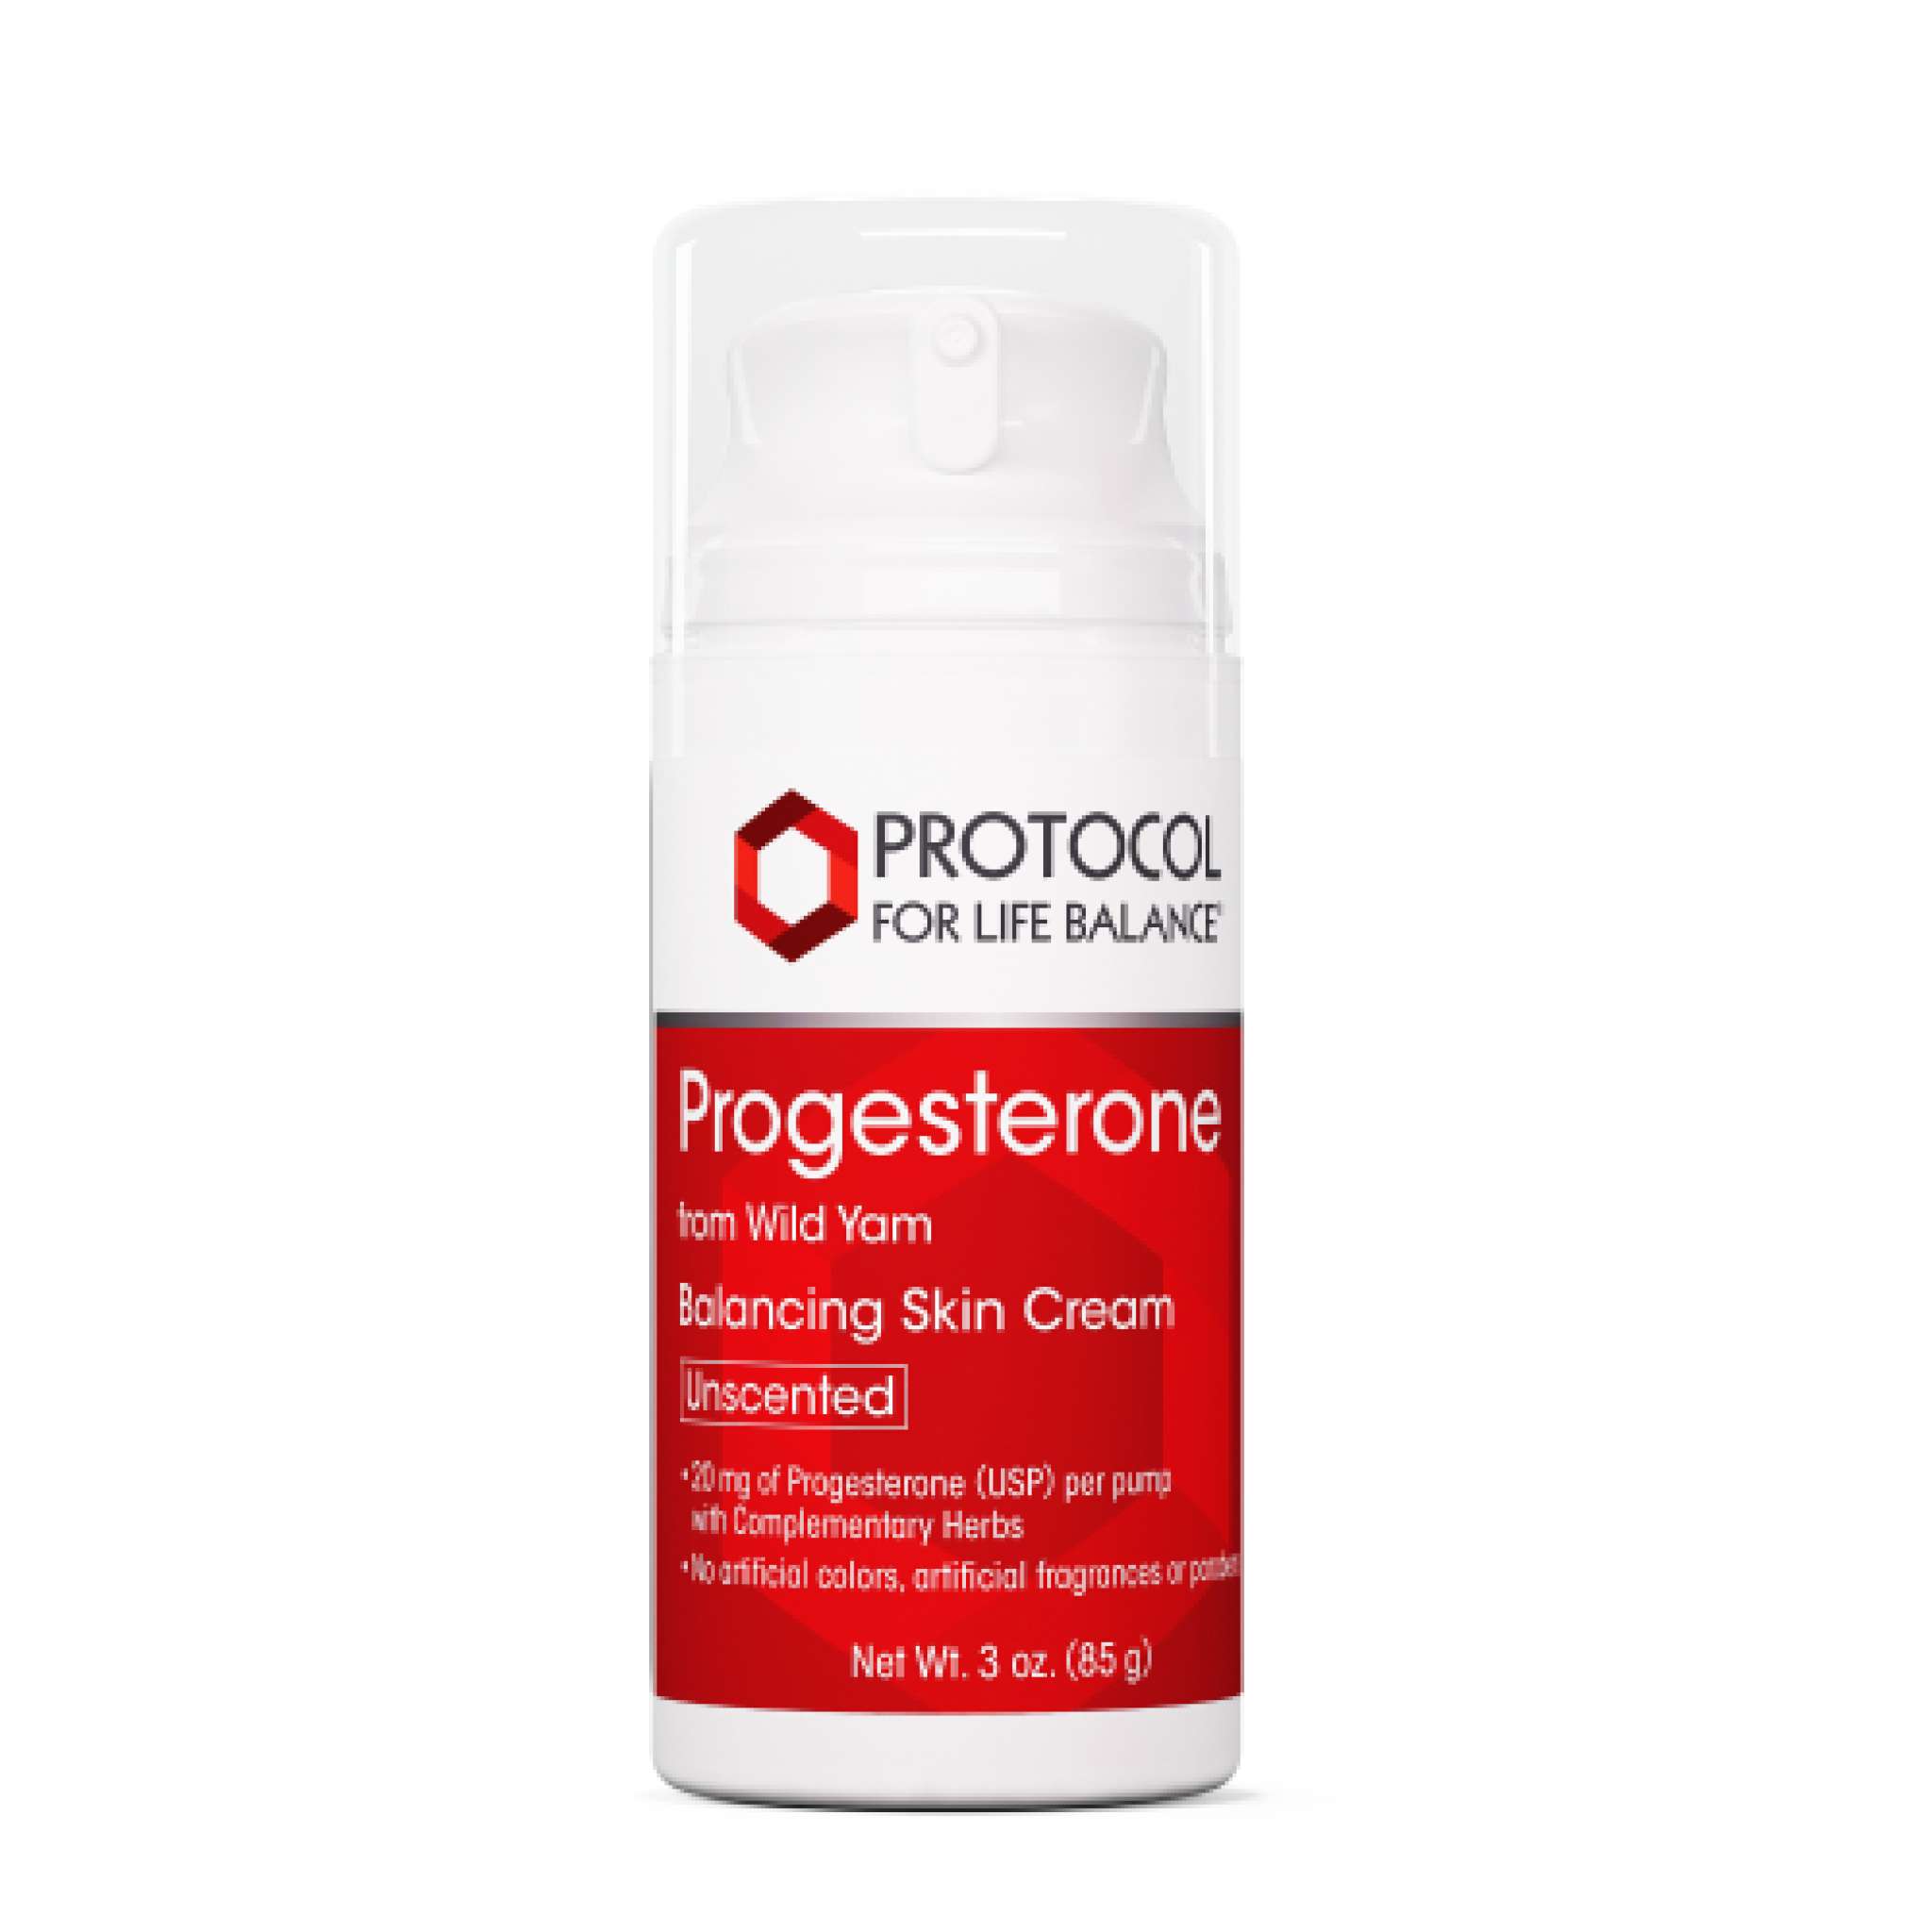 Protocol For Life Balance - Progesterone crm Skin crm